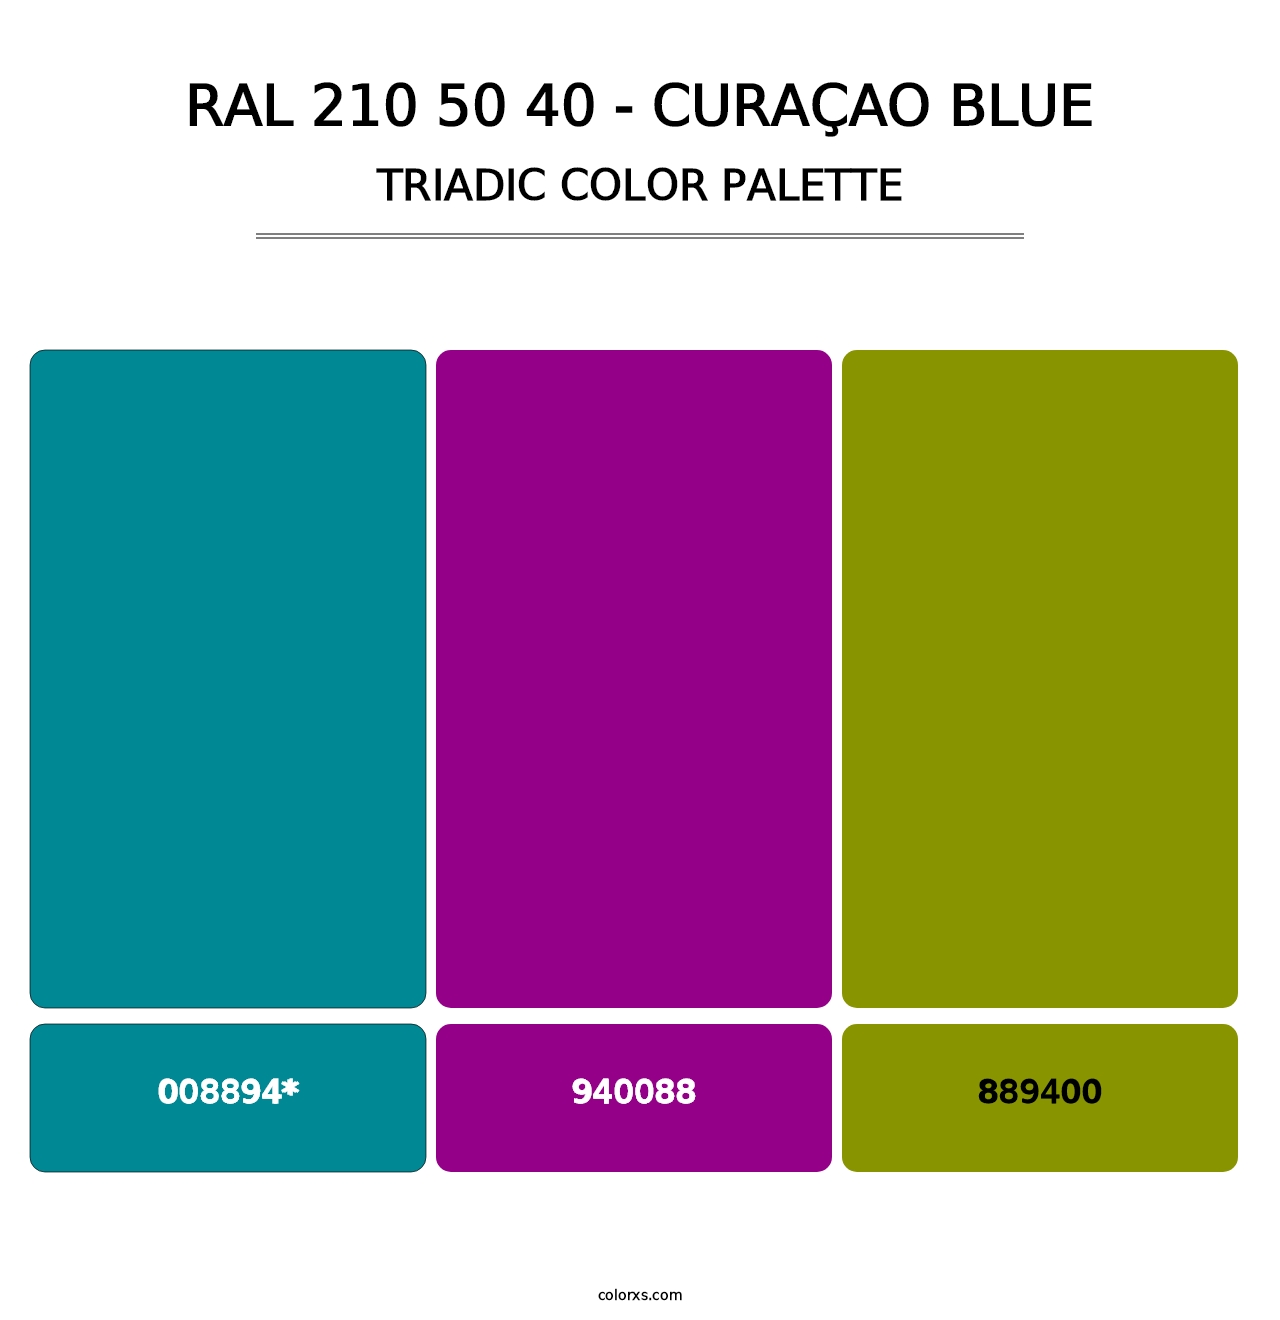 RAL 210 50 40 - Curaçao Blue - Triadic Color Palette